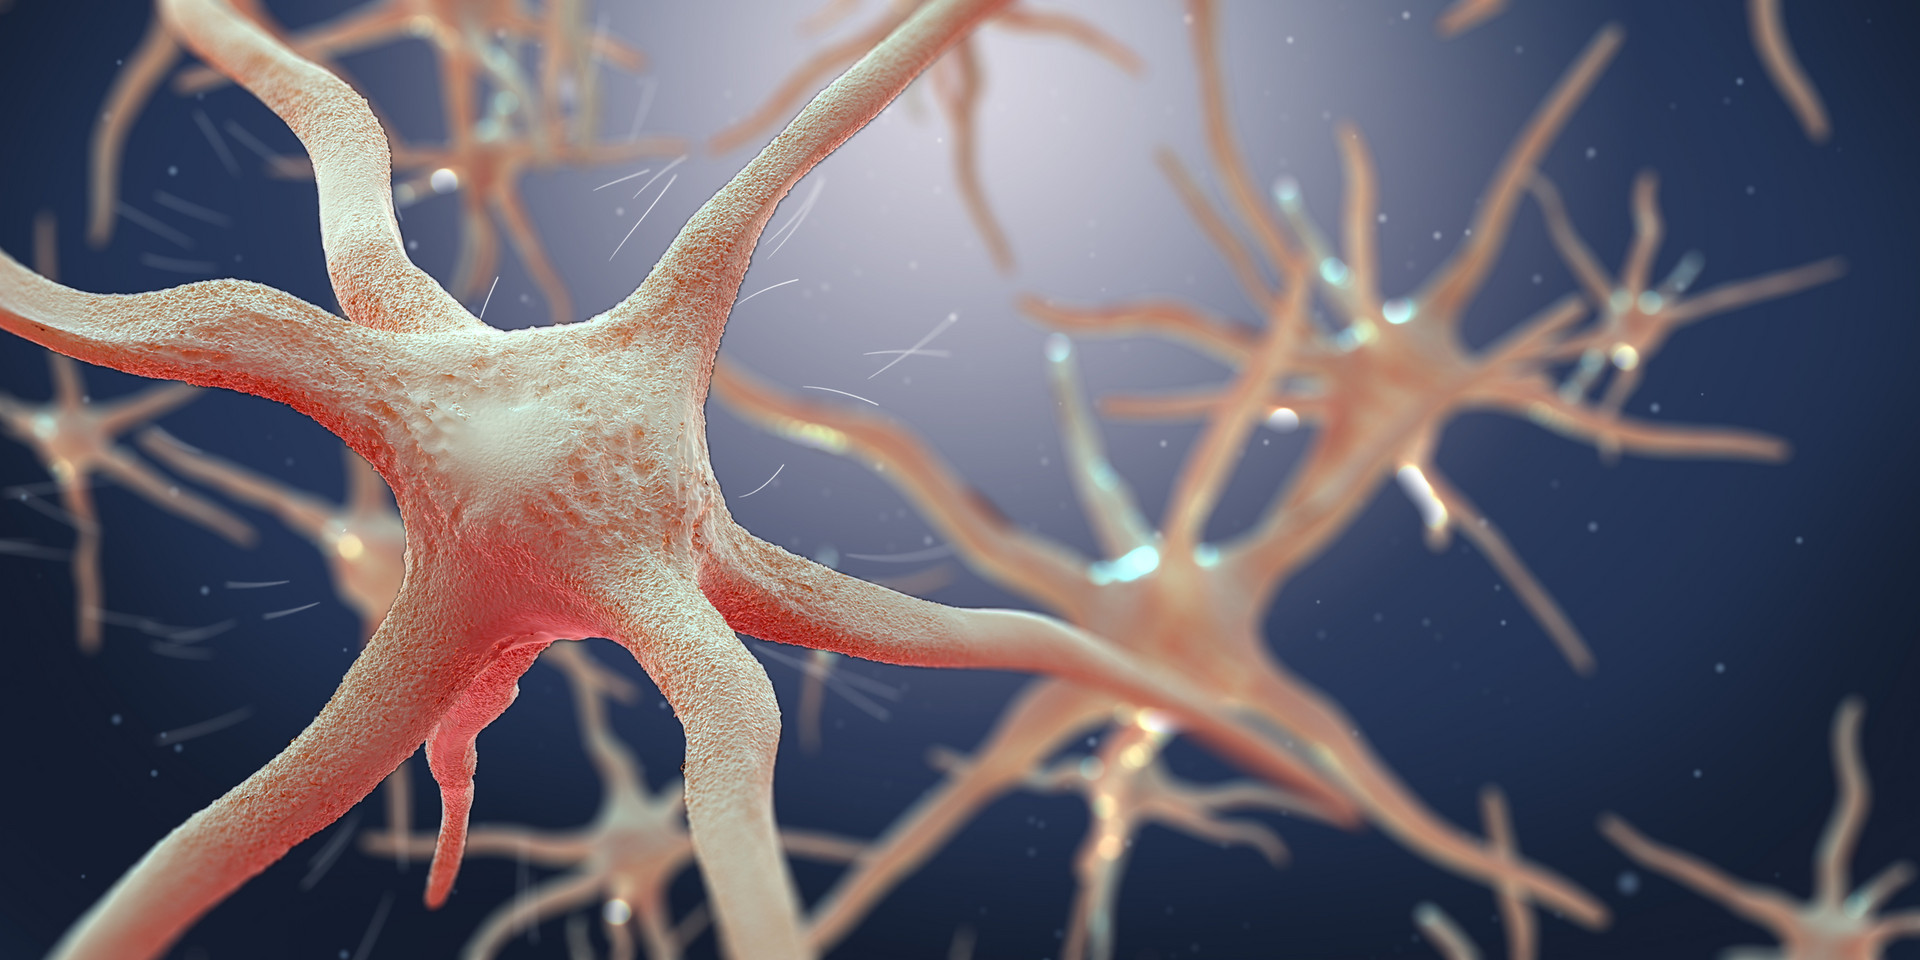 【Cell子刊】发现脑损伤后的<font color="red">修复机制</font>——神经元和神经胶质协同驱动神经再生！